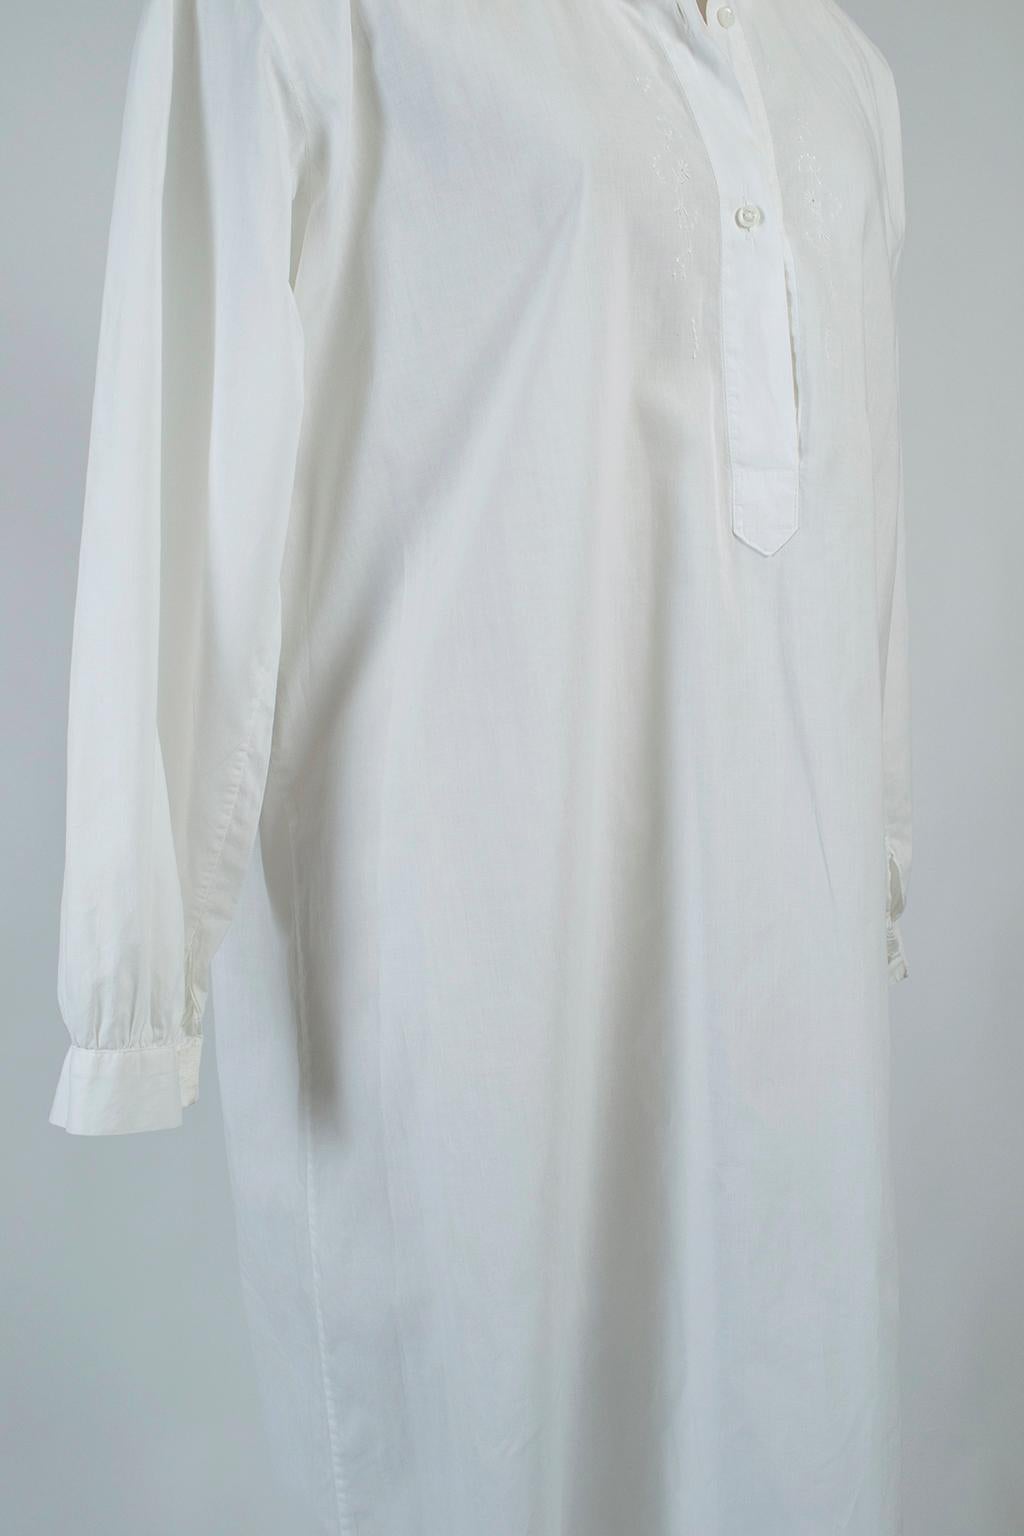 Women's Edwardian White Embroidered Cotton Poplin Nightshirt Sleep Shirt - M, 1910s For Sale